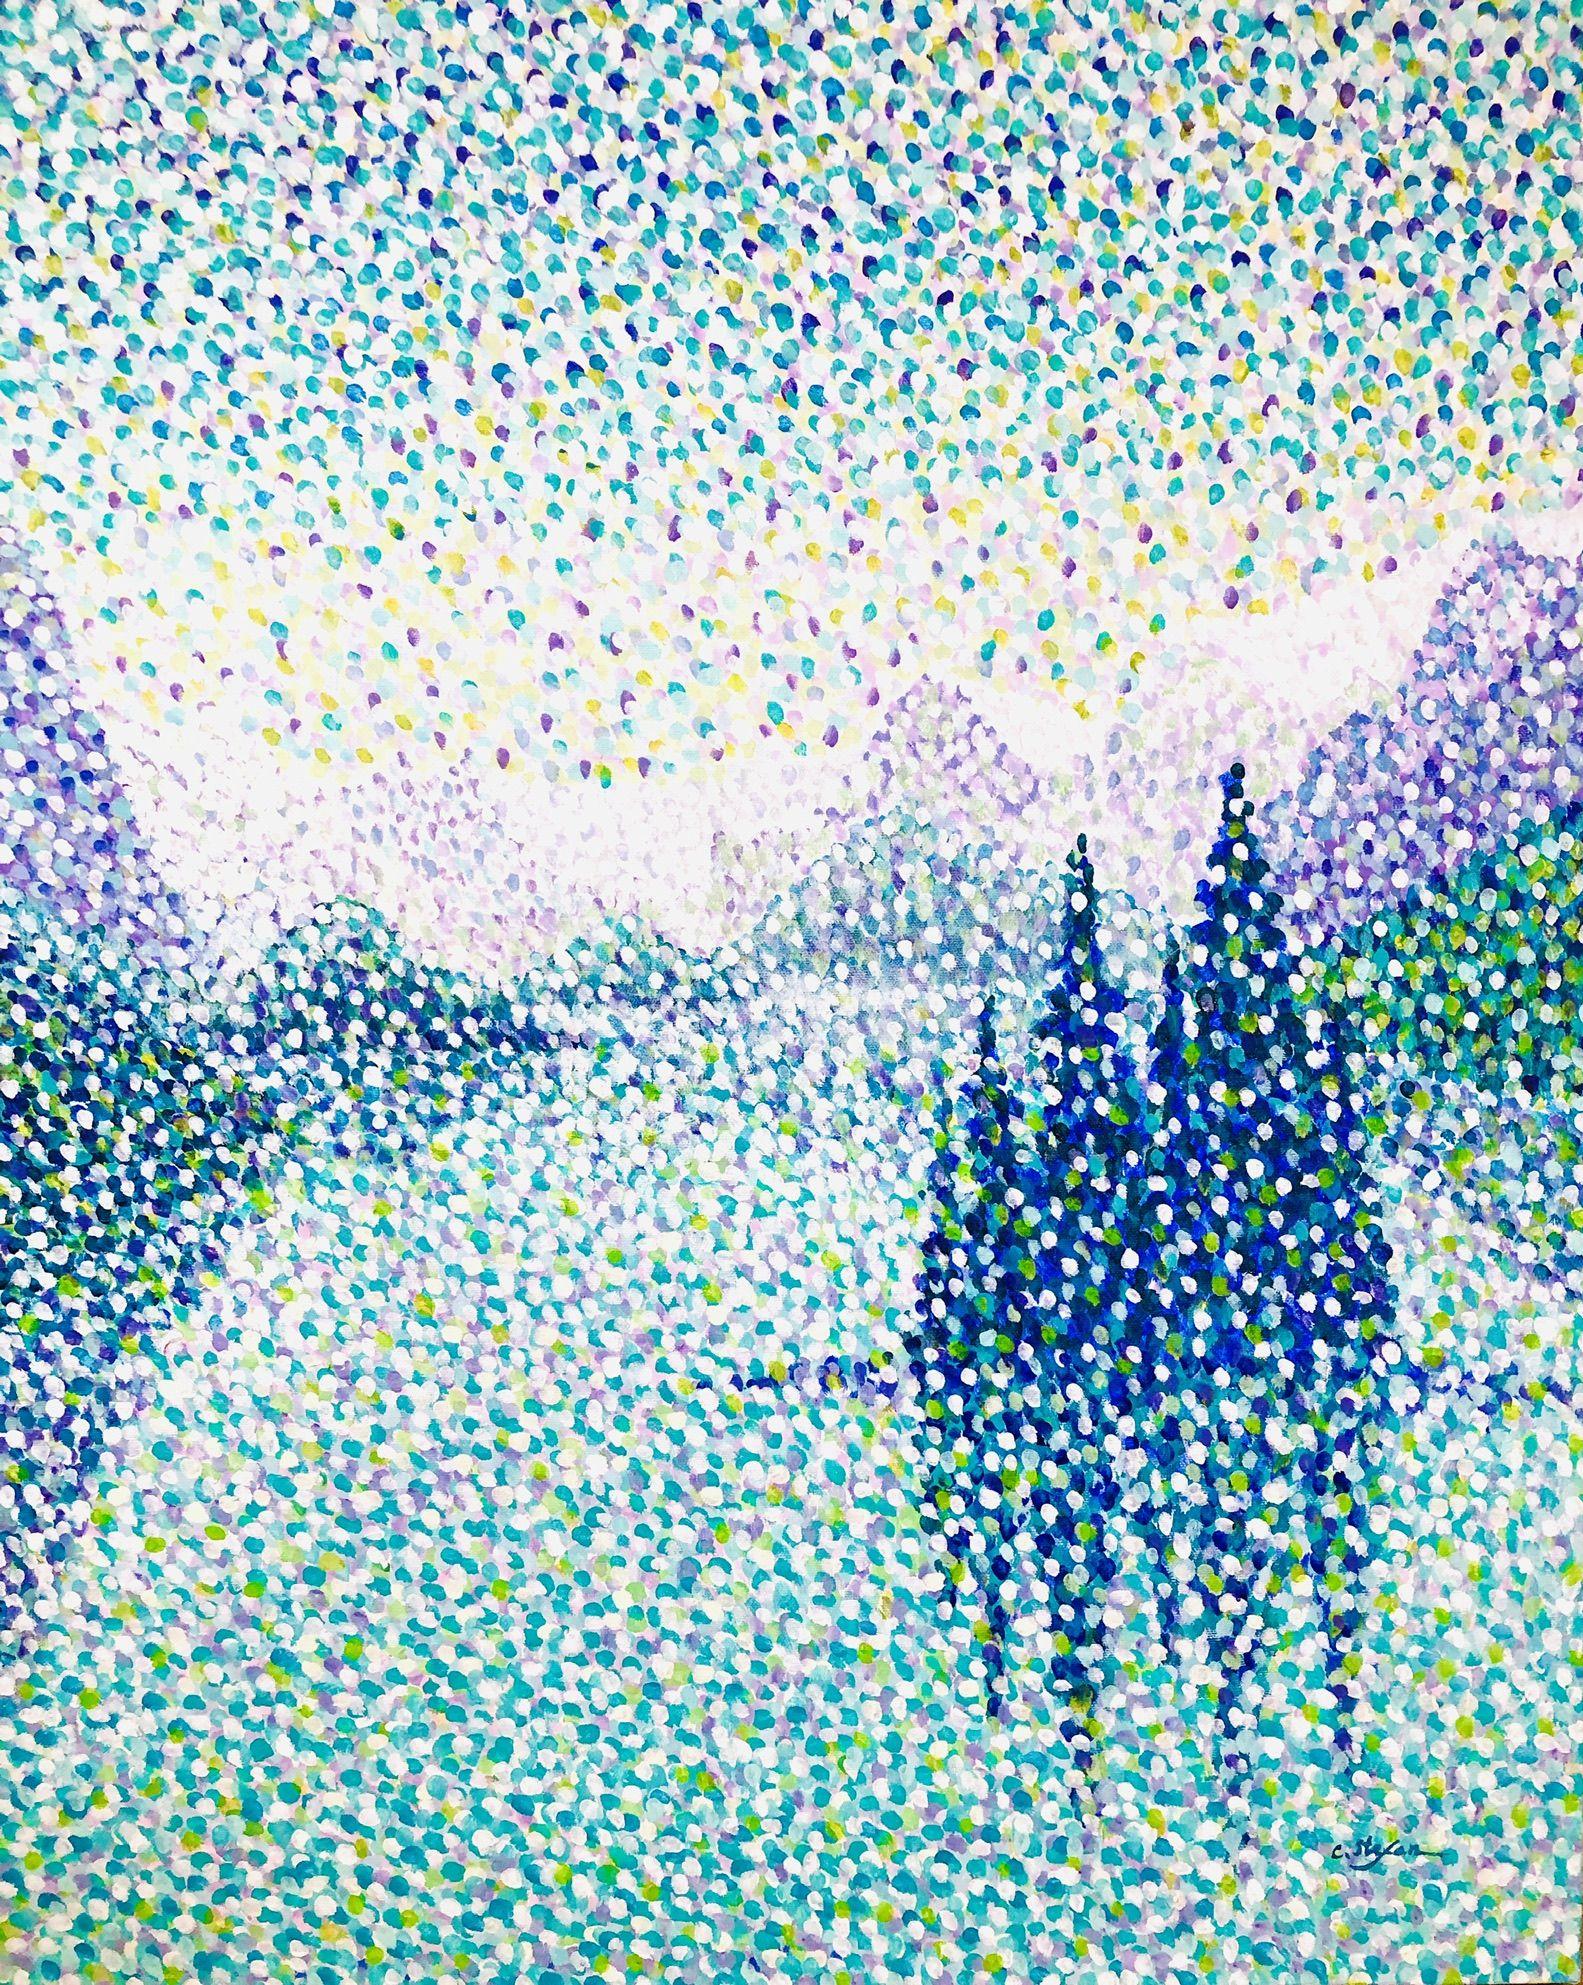 Spirit Island, Lake Maligne, Rocky Mountains, Painting, Acrylic on Canvas